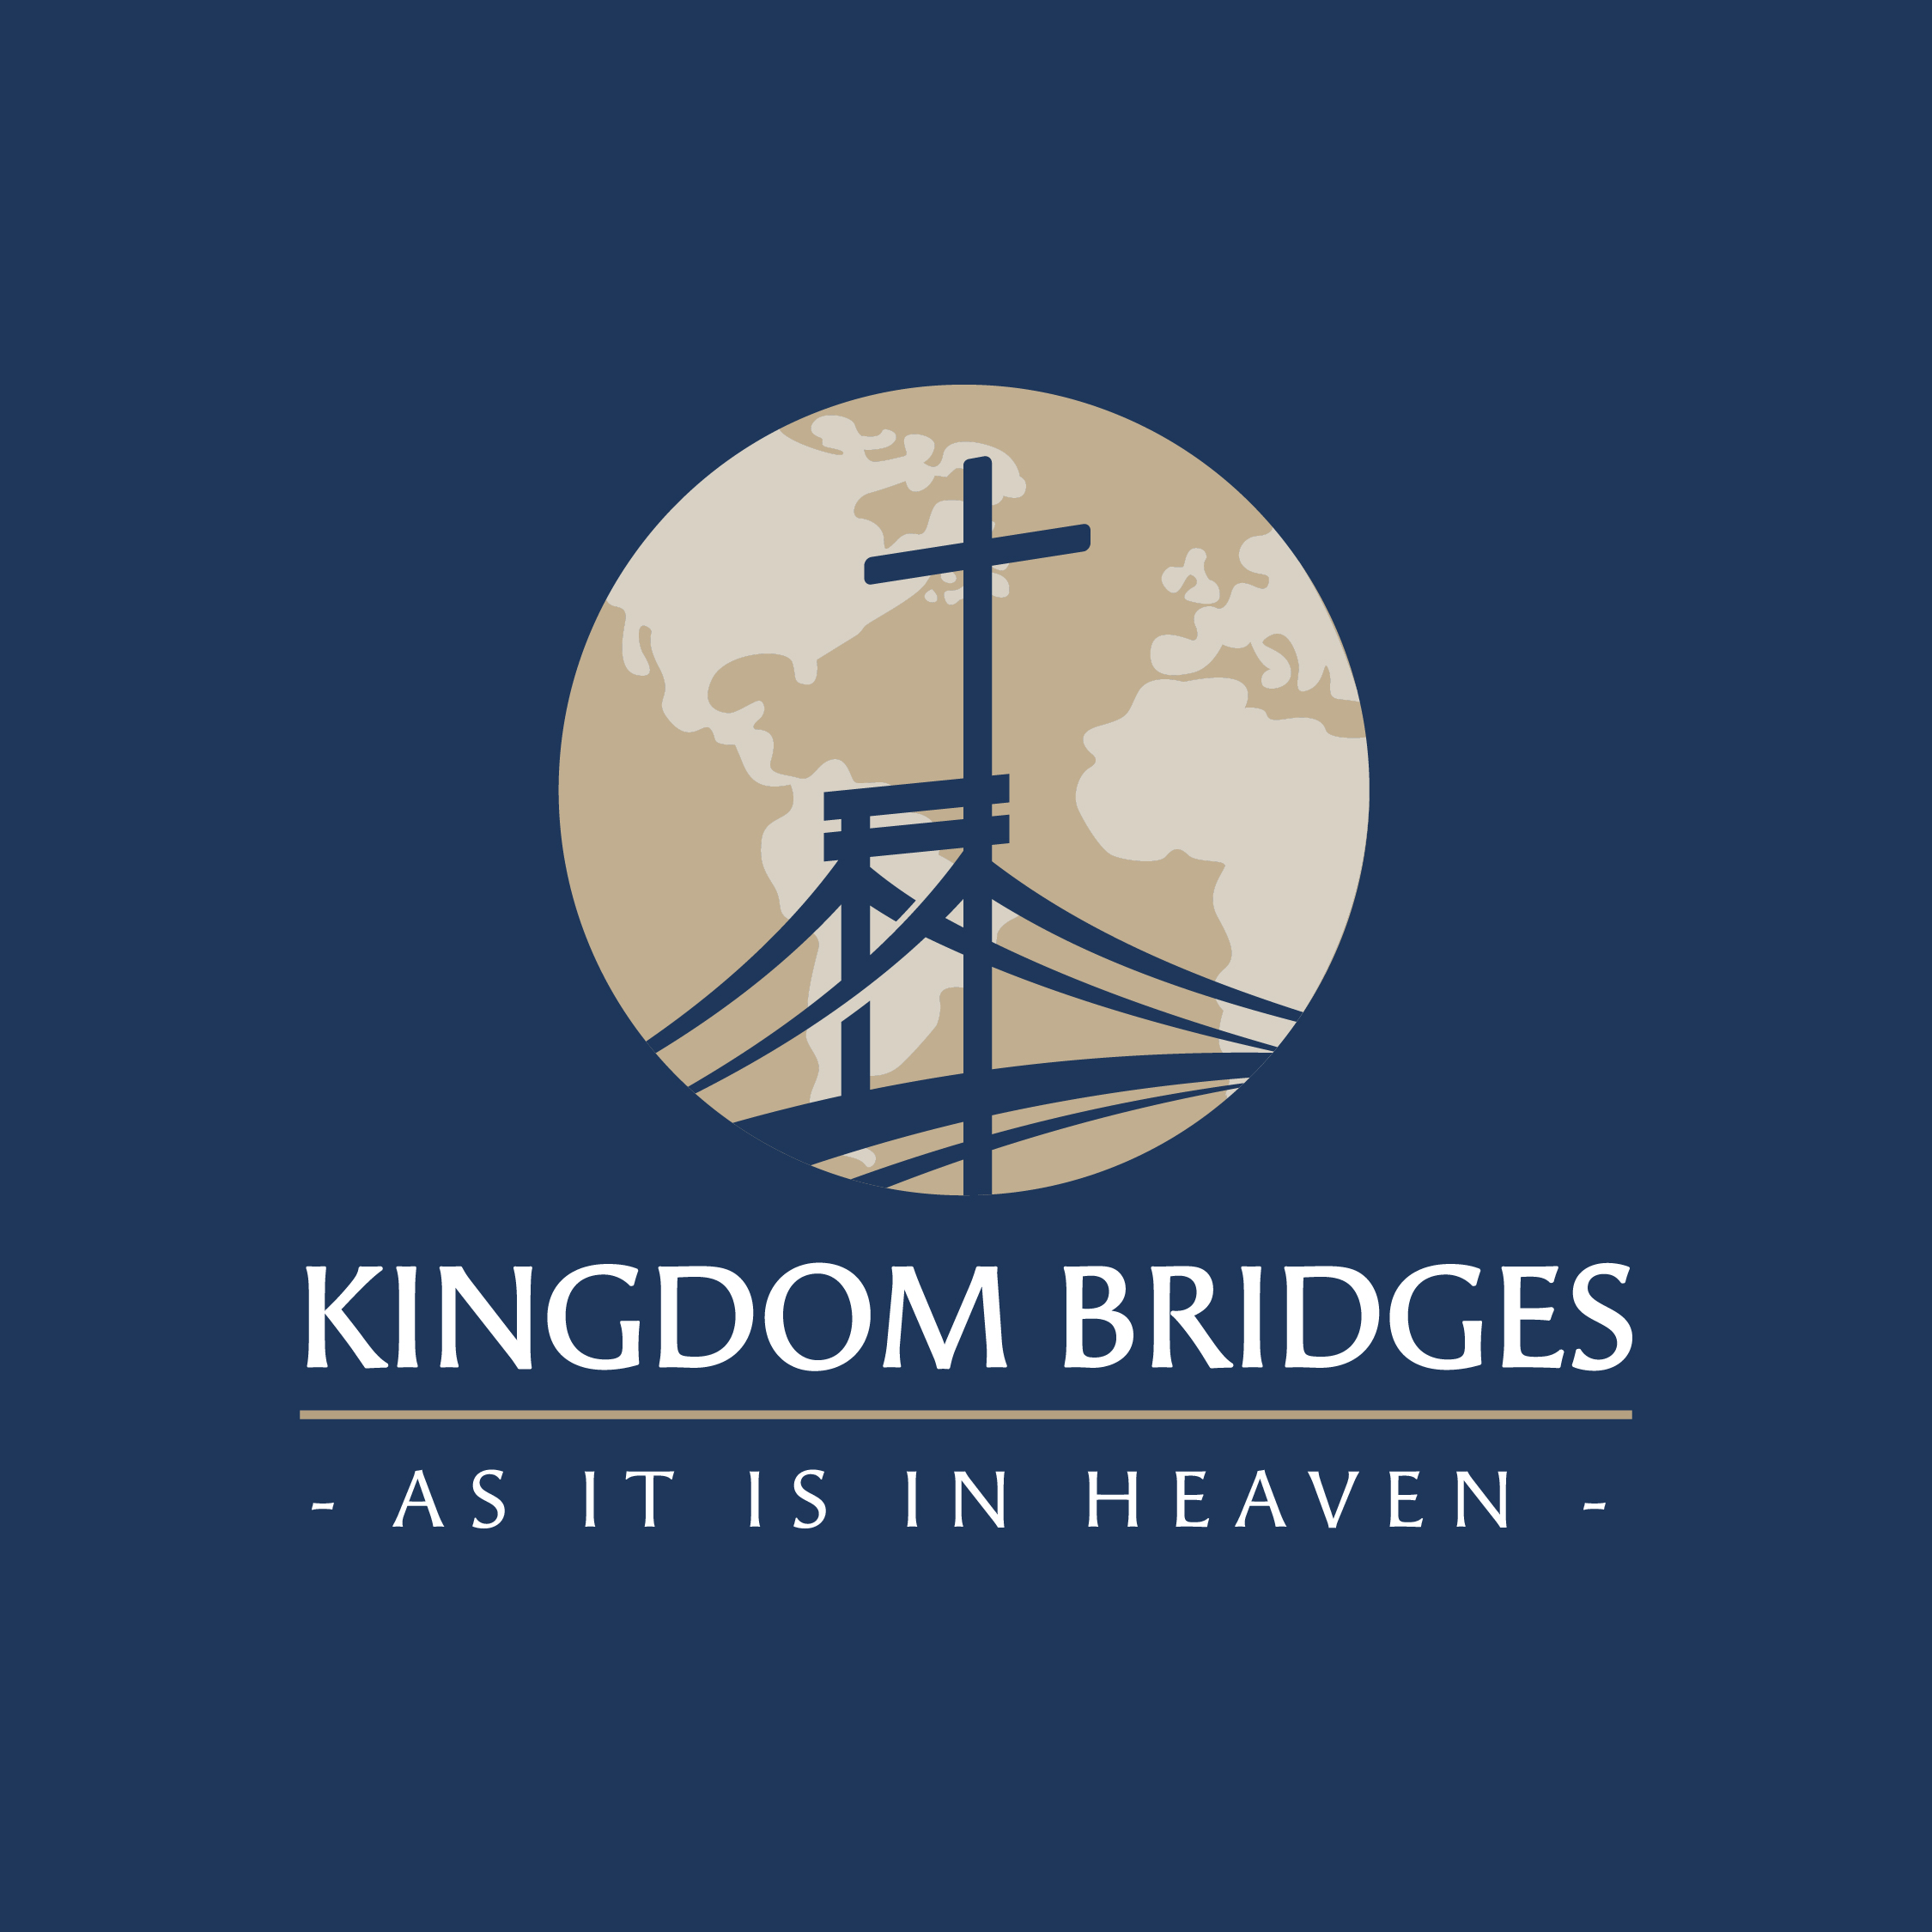 Kingdom Bridges